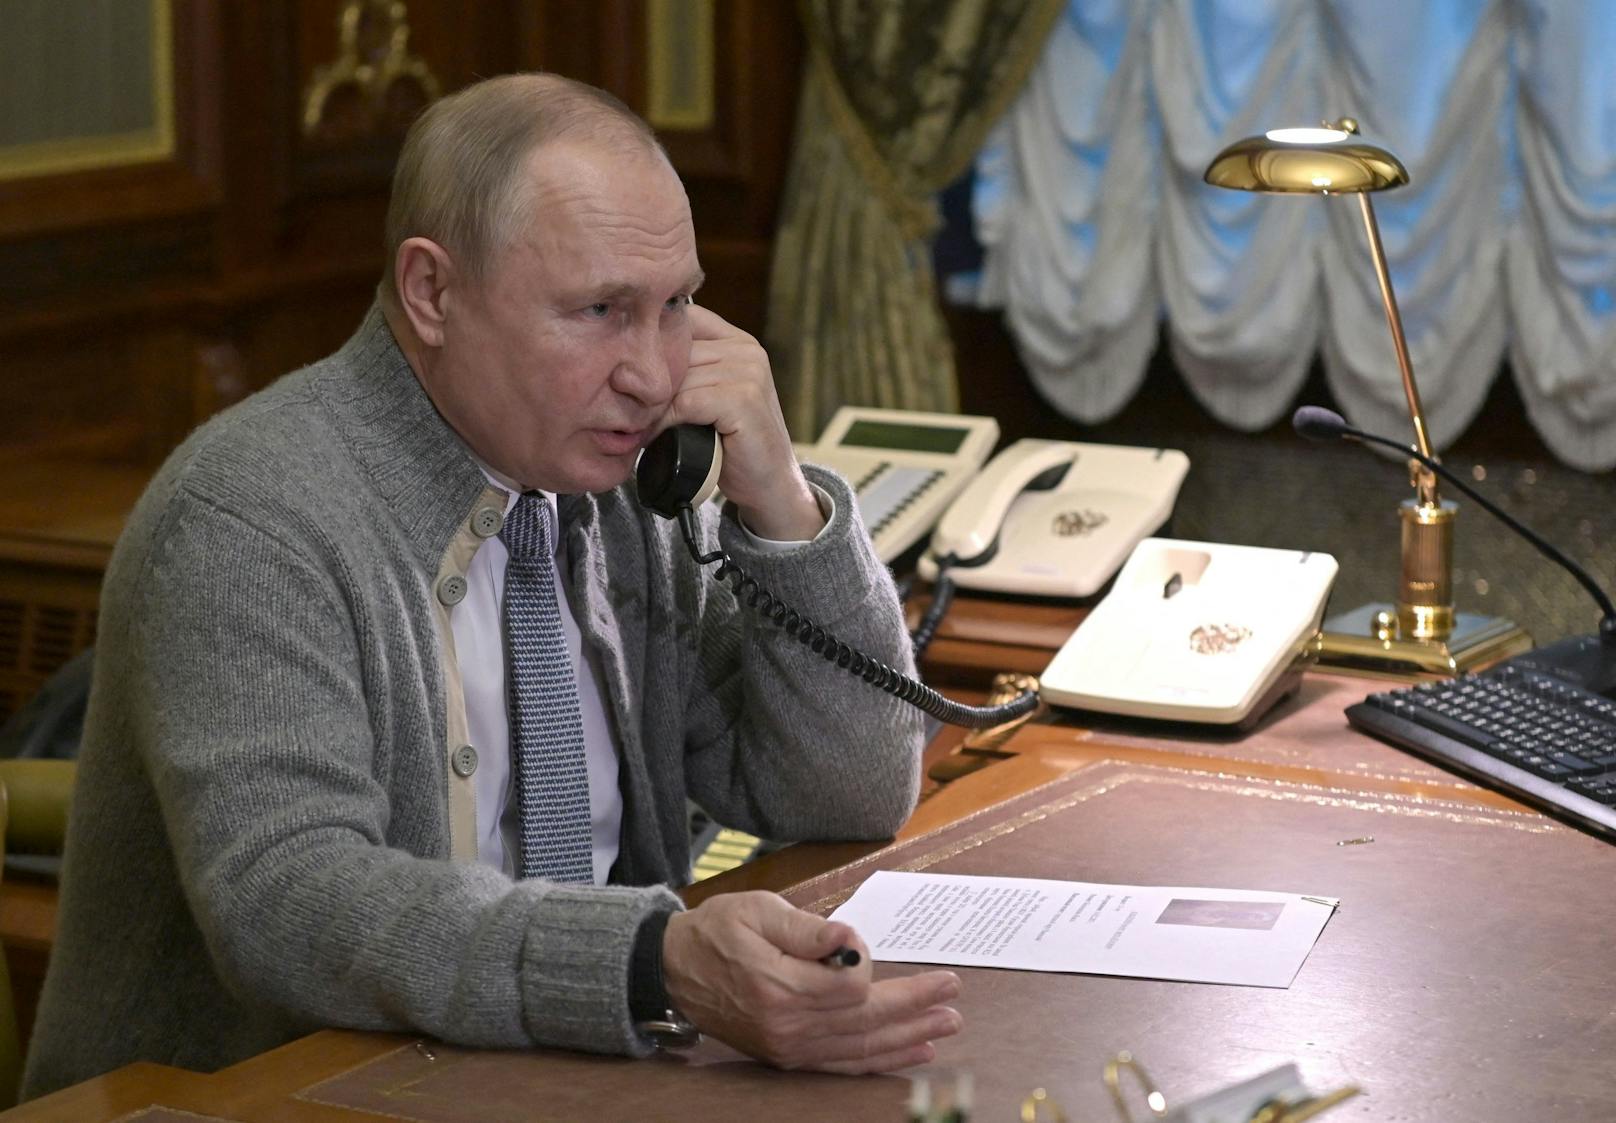 "Wegen euch!" – Putin macht Scholz am Telefon Vorwürfe